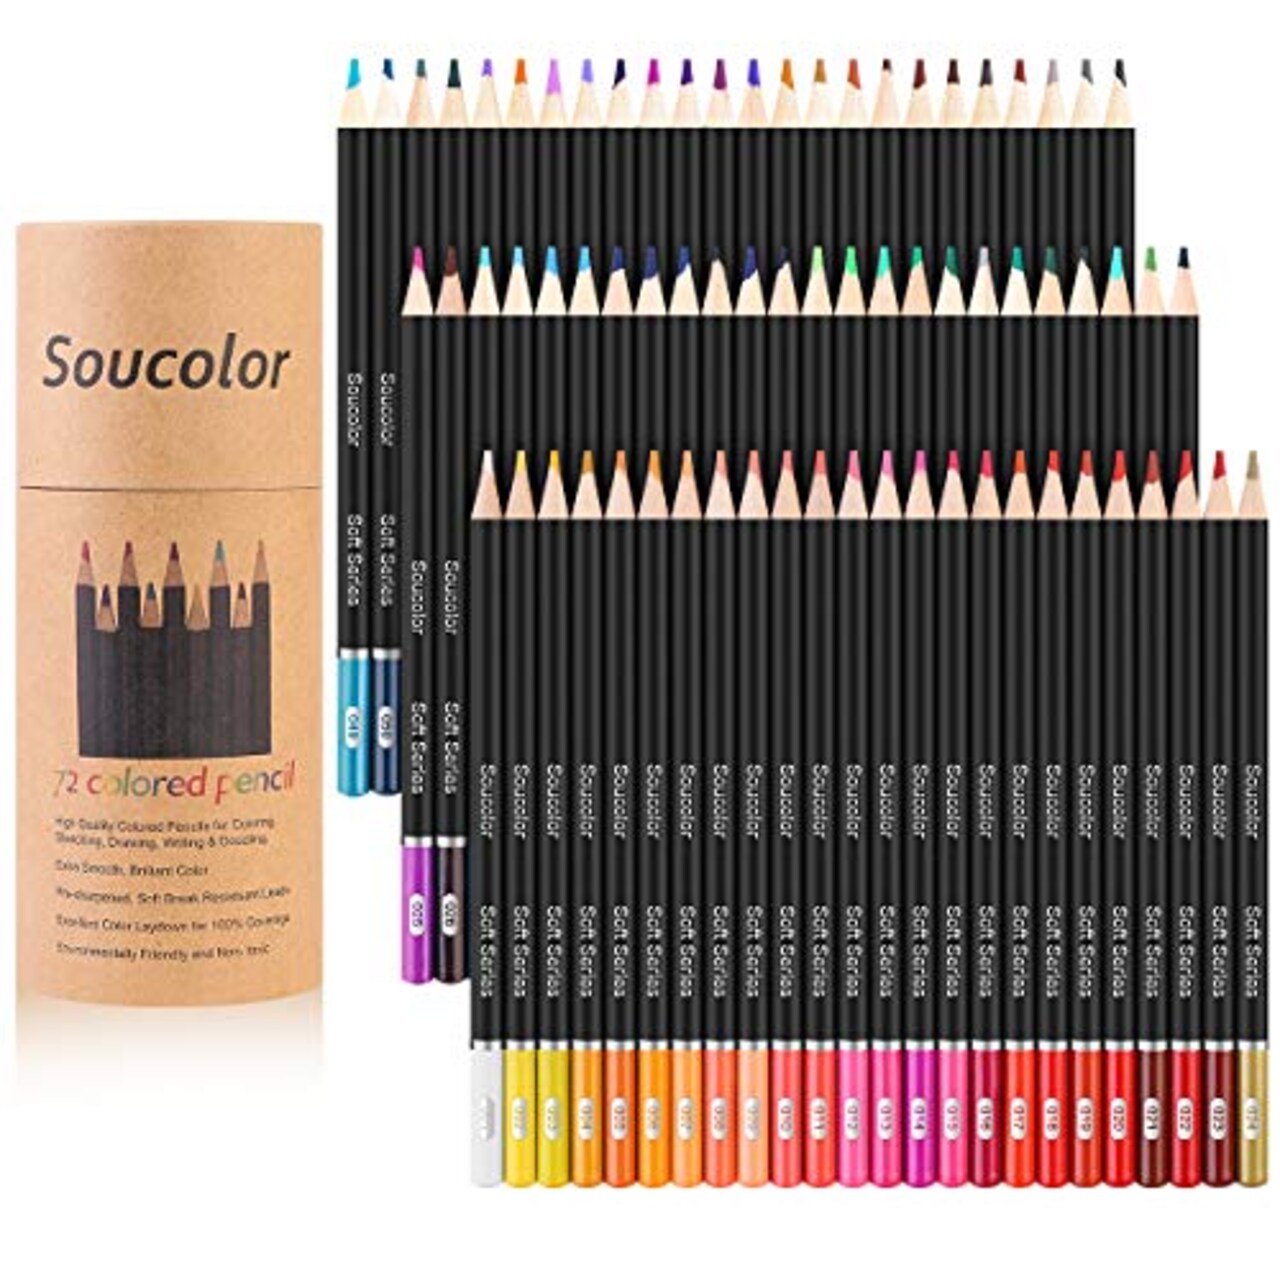 Soucolor 72-Color Colored Pencils for Coloring Books, Soft Core